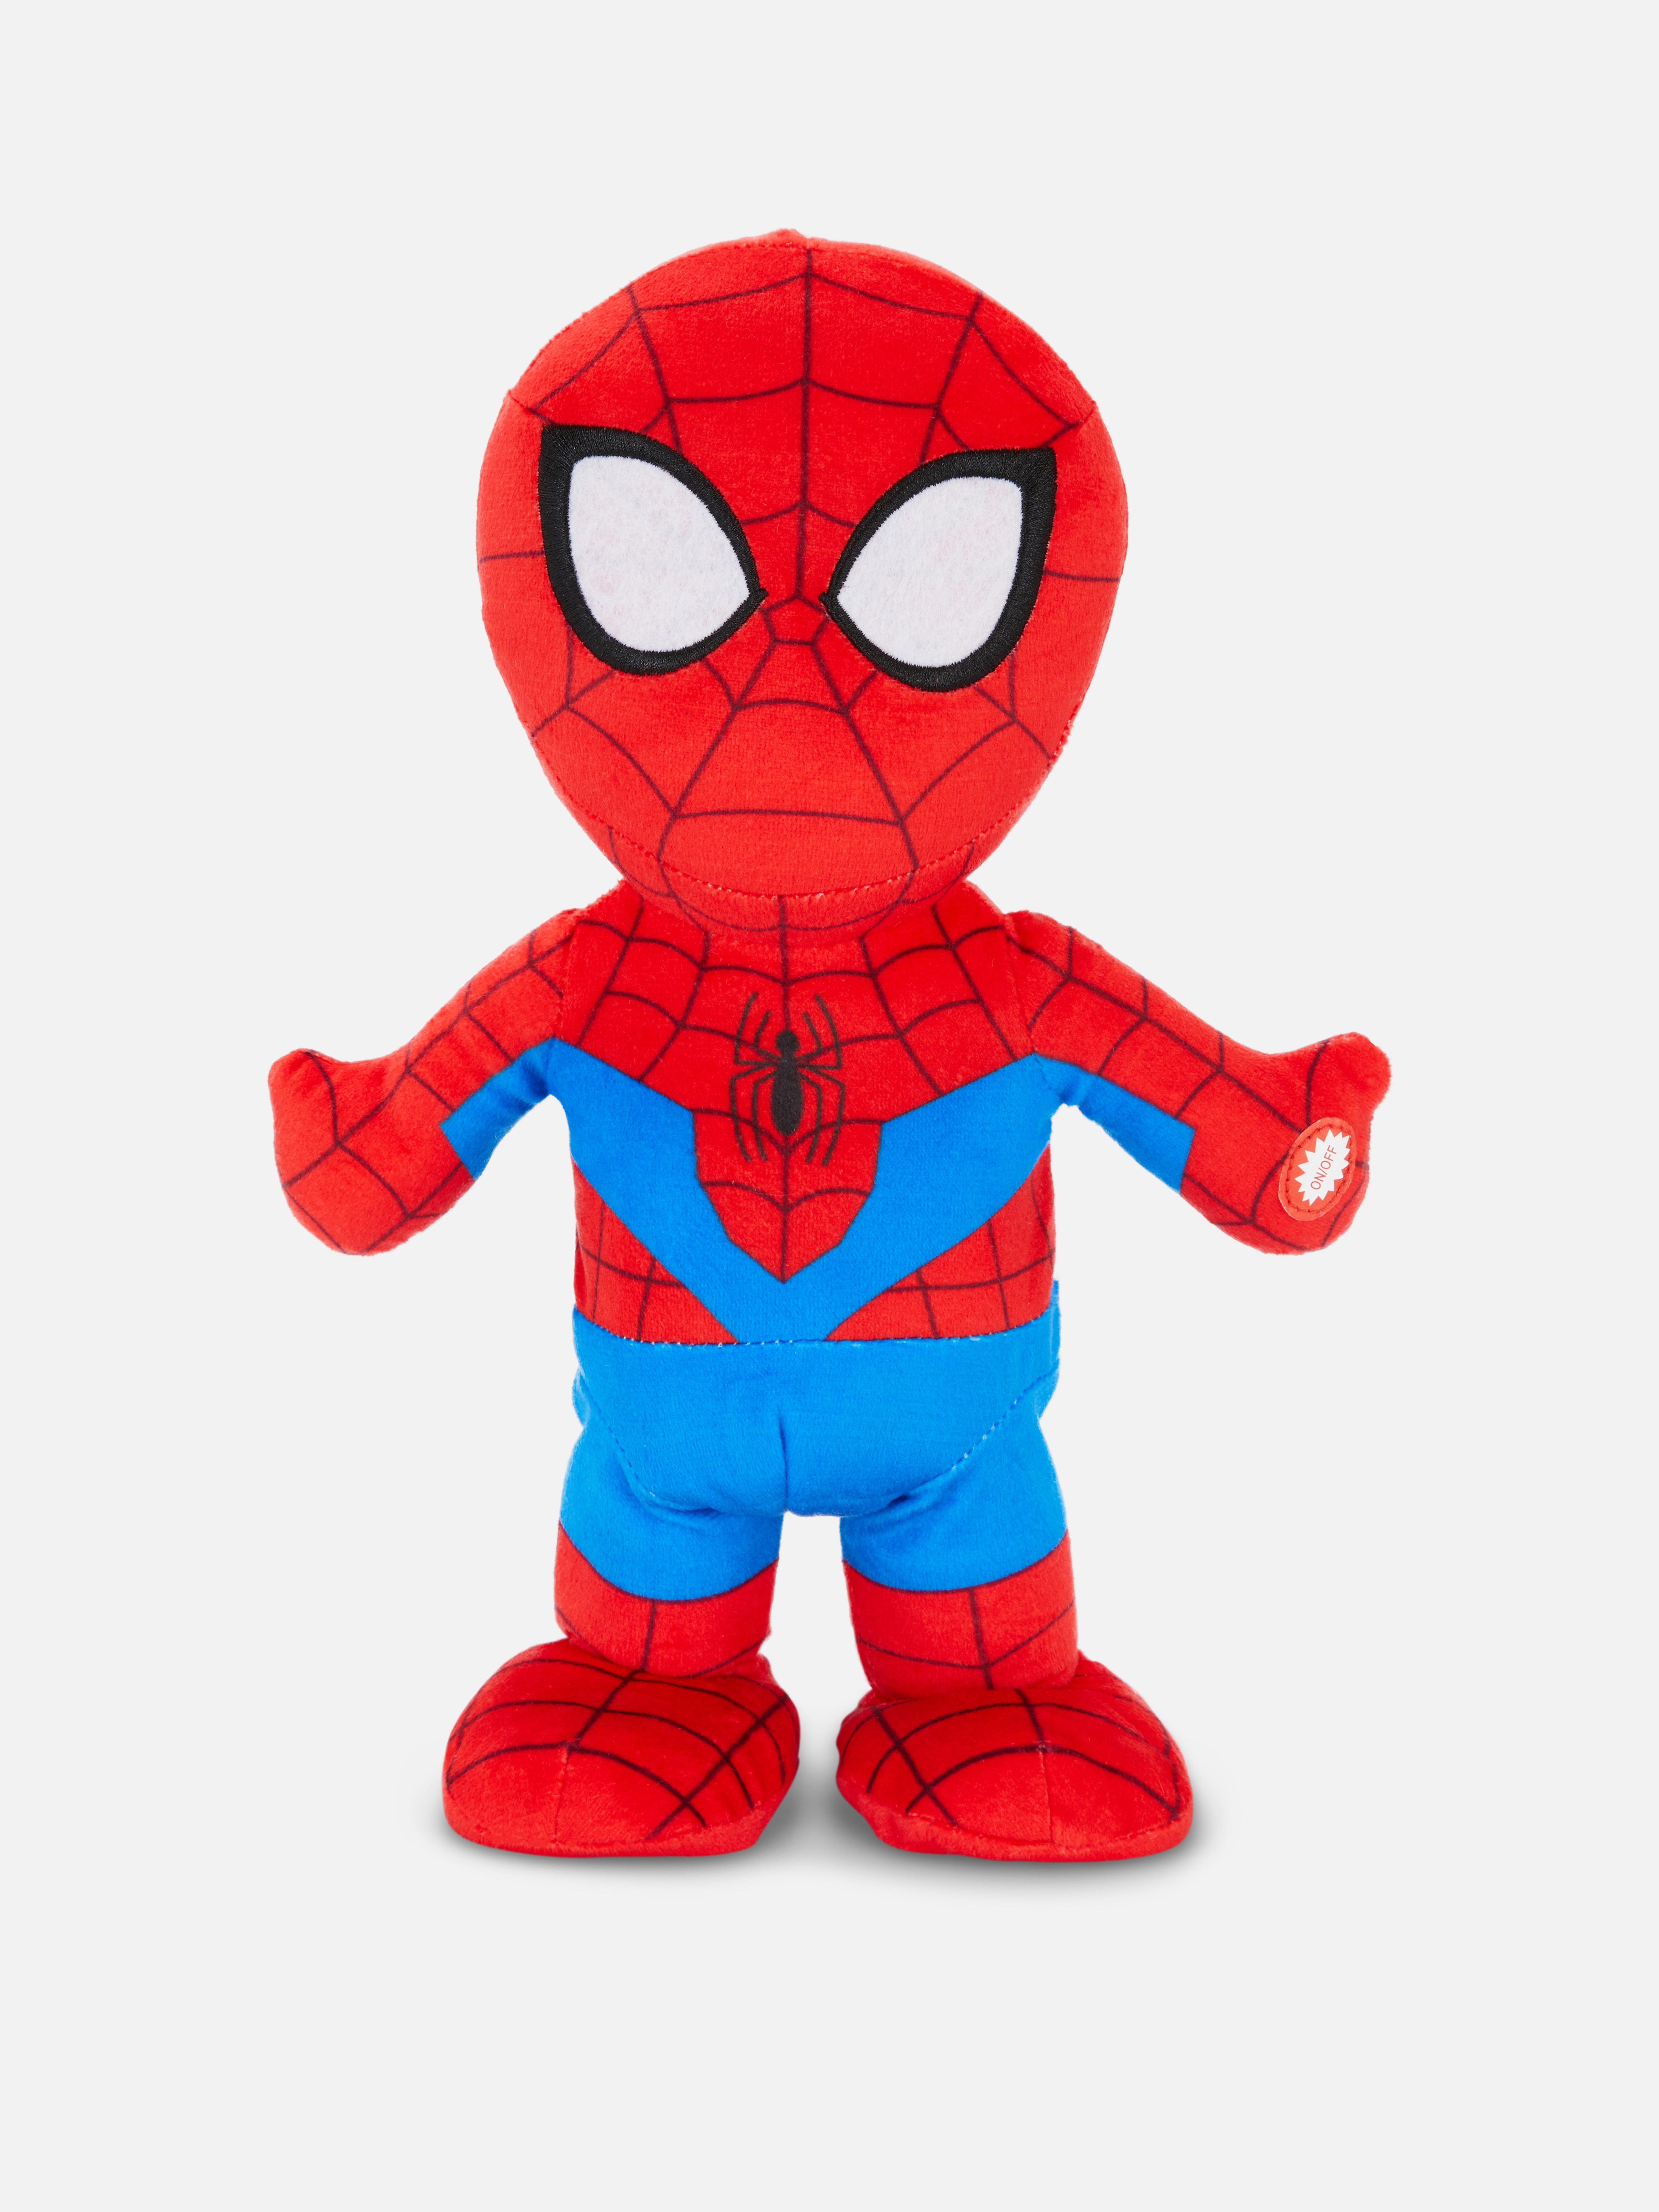 Marvel Spider-Man Animated Plush Toy